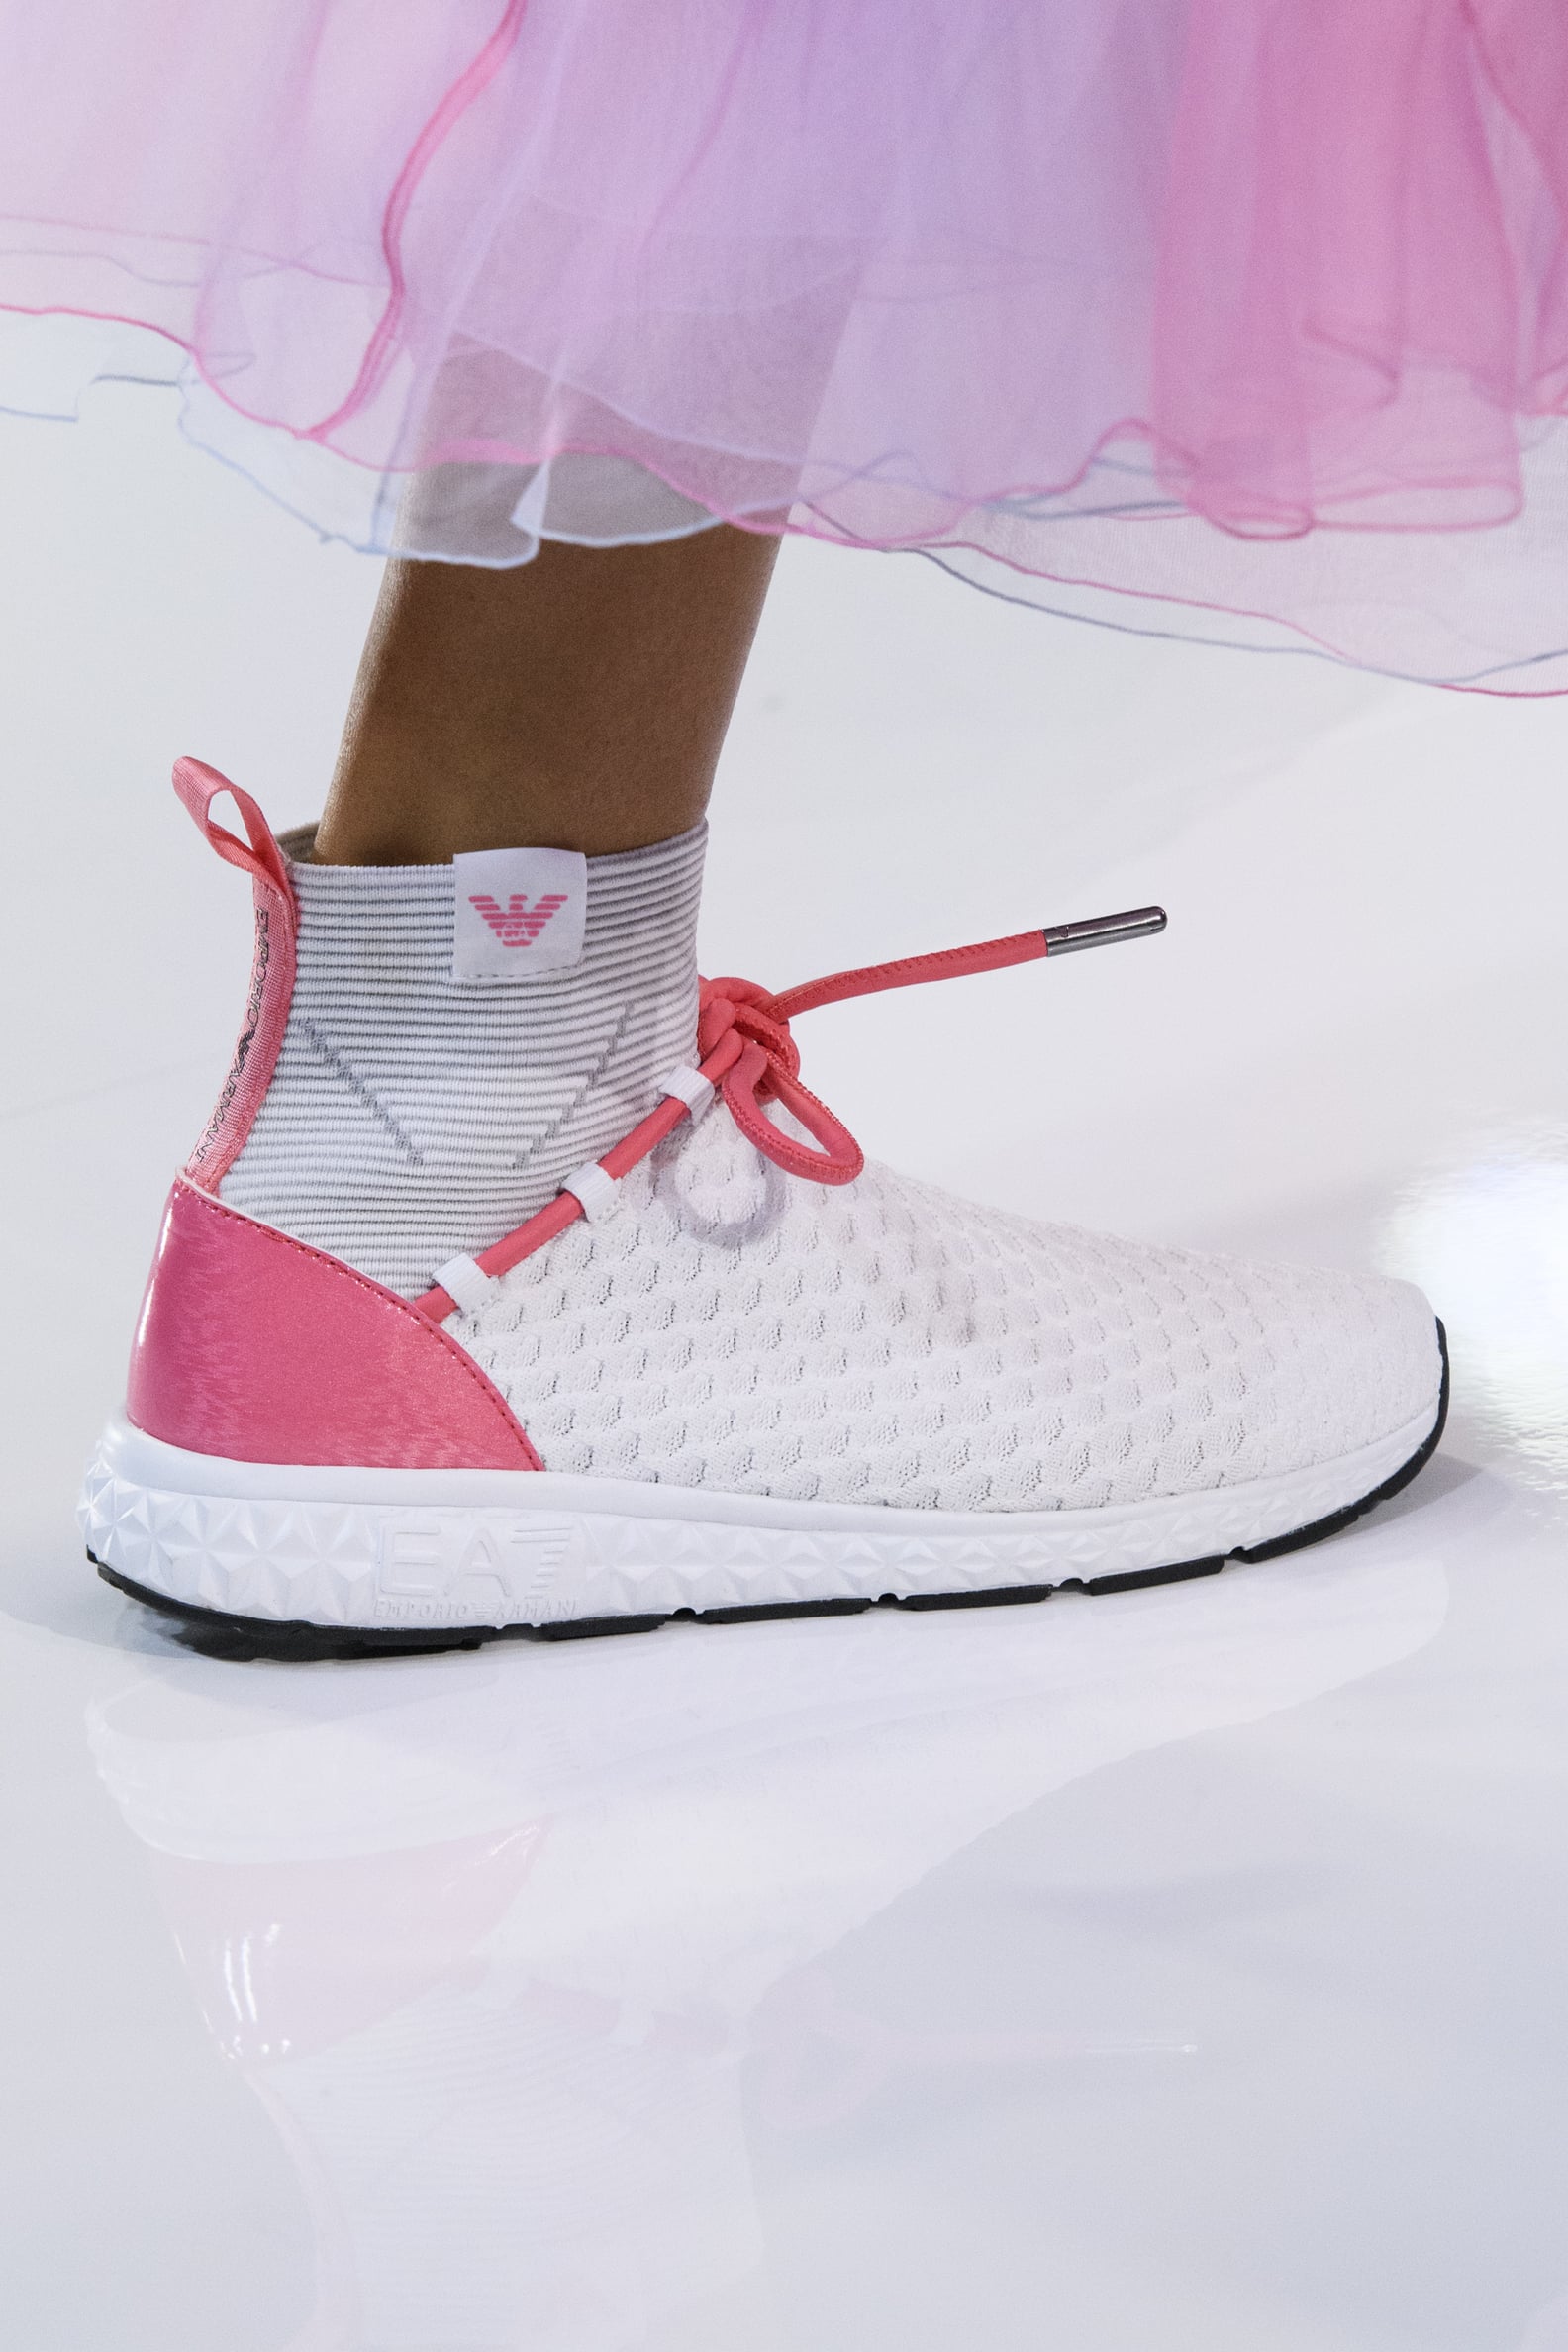 Shoe Trends Spring 2018 | POPSUGAR Fashion